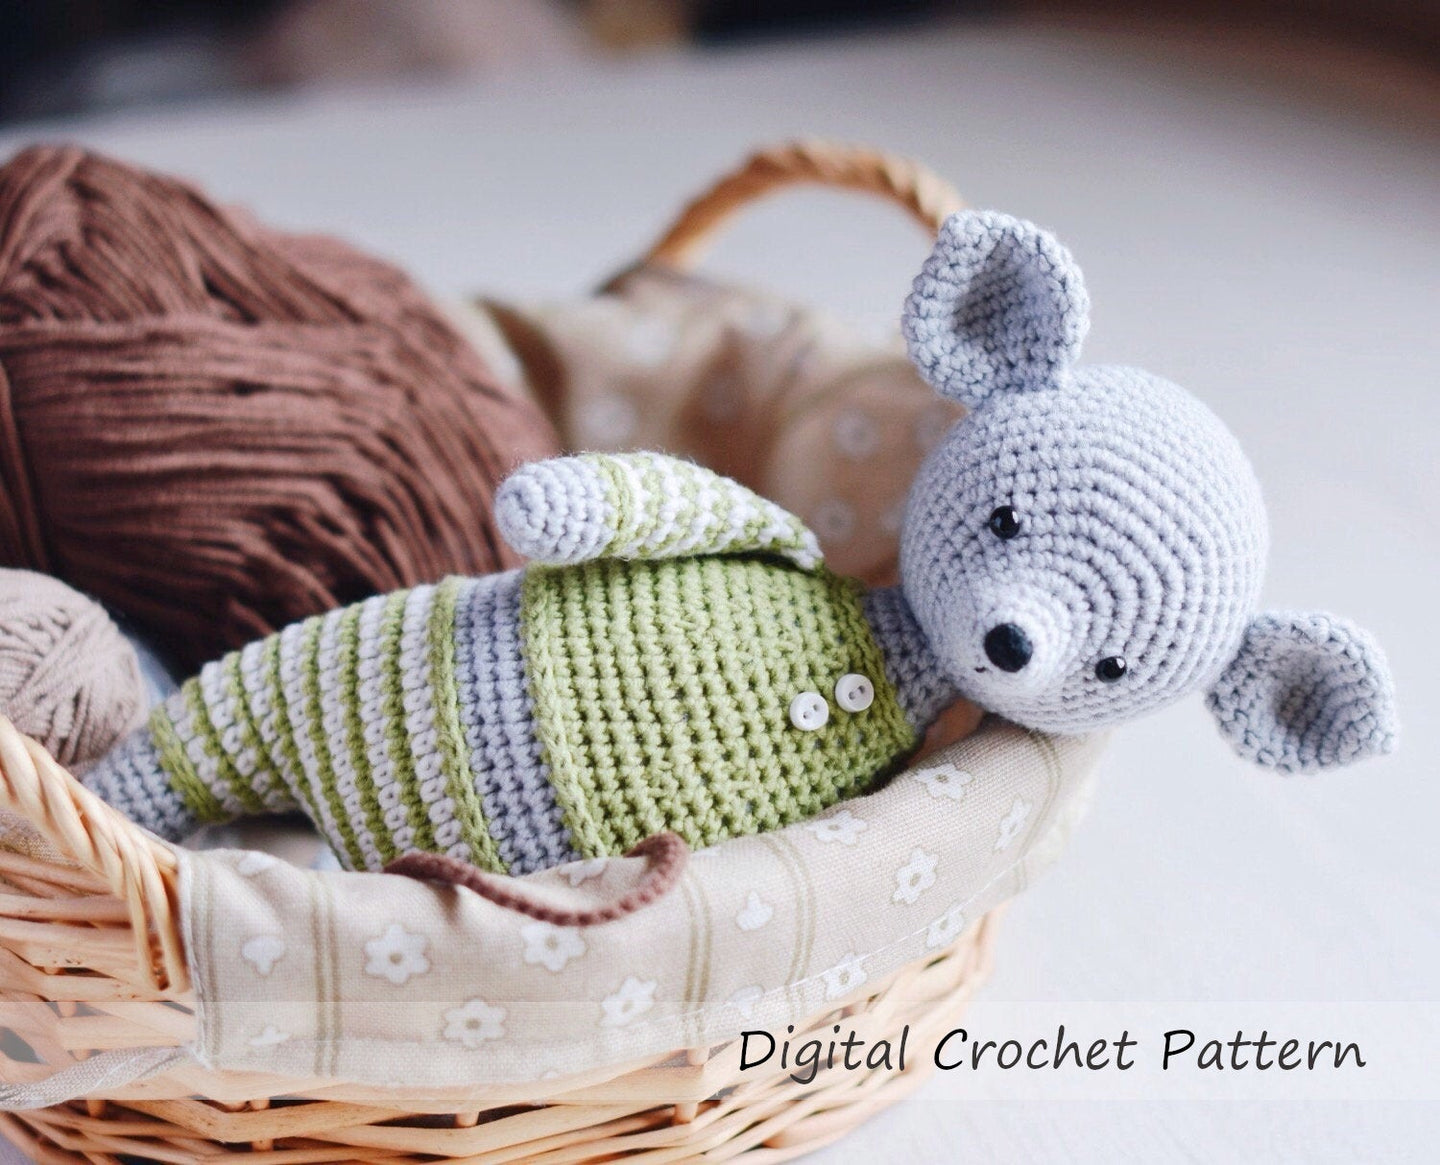 Crochet Pattern to make Mouse Stuffed Animal - Firefly Crochet